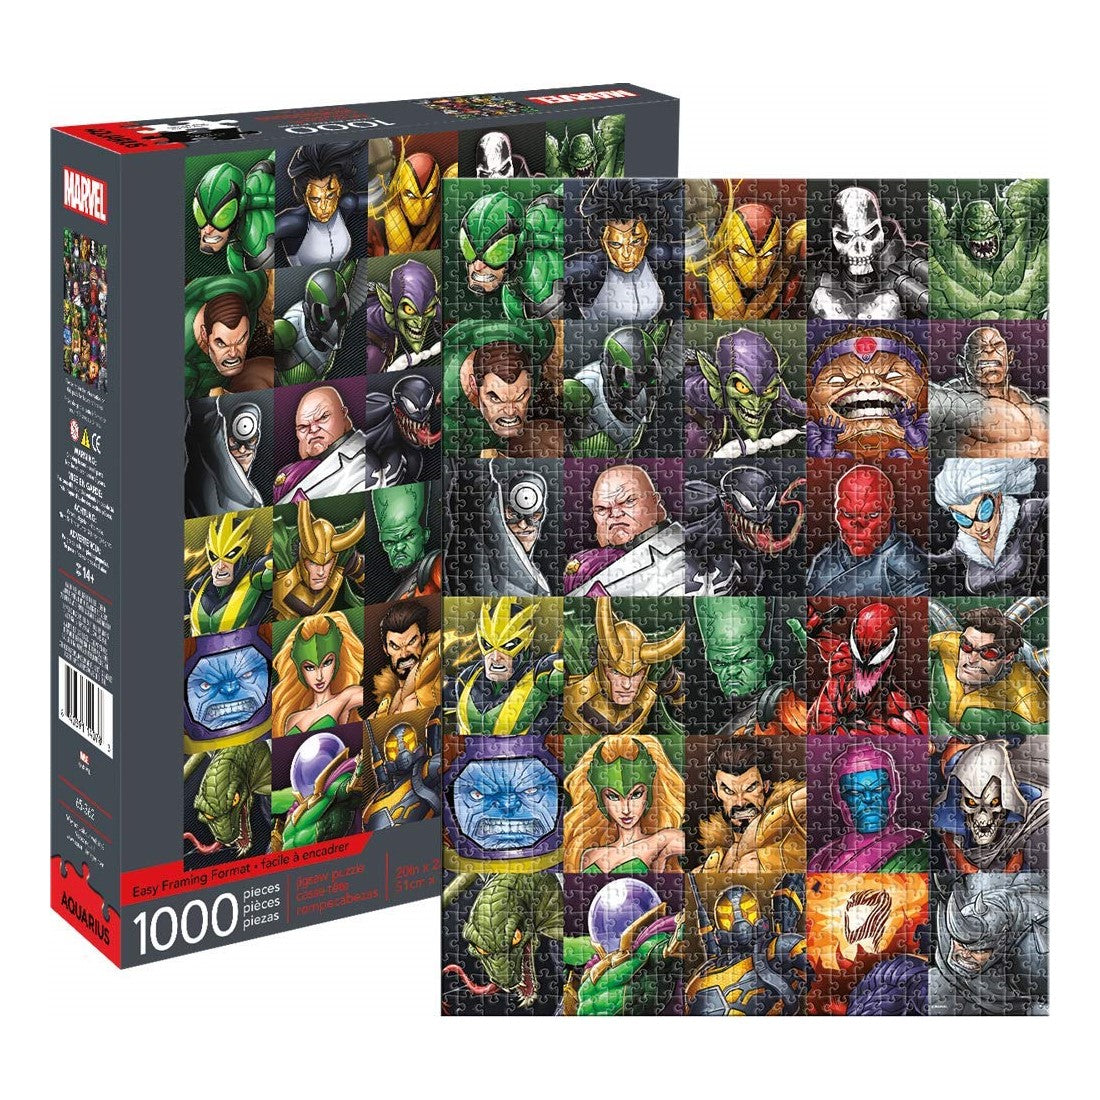 Marvel Villains Collage Jigsaw Puzzle 1000 pieces